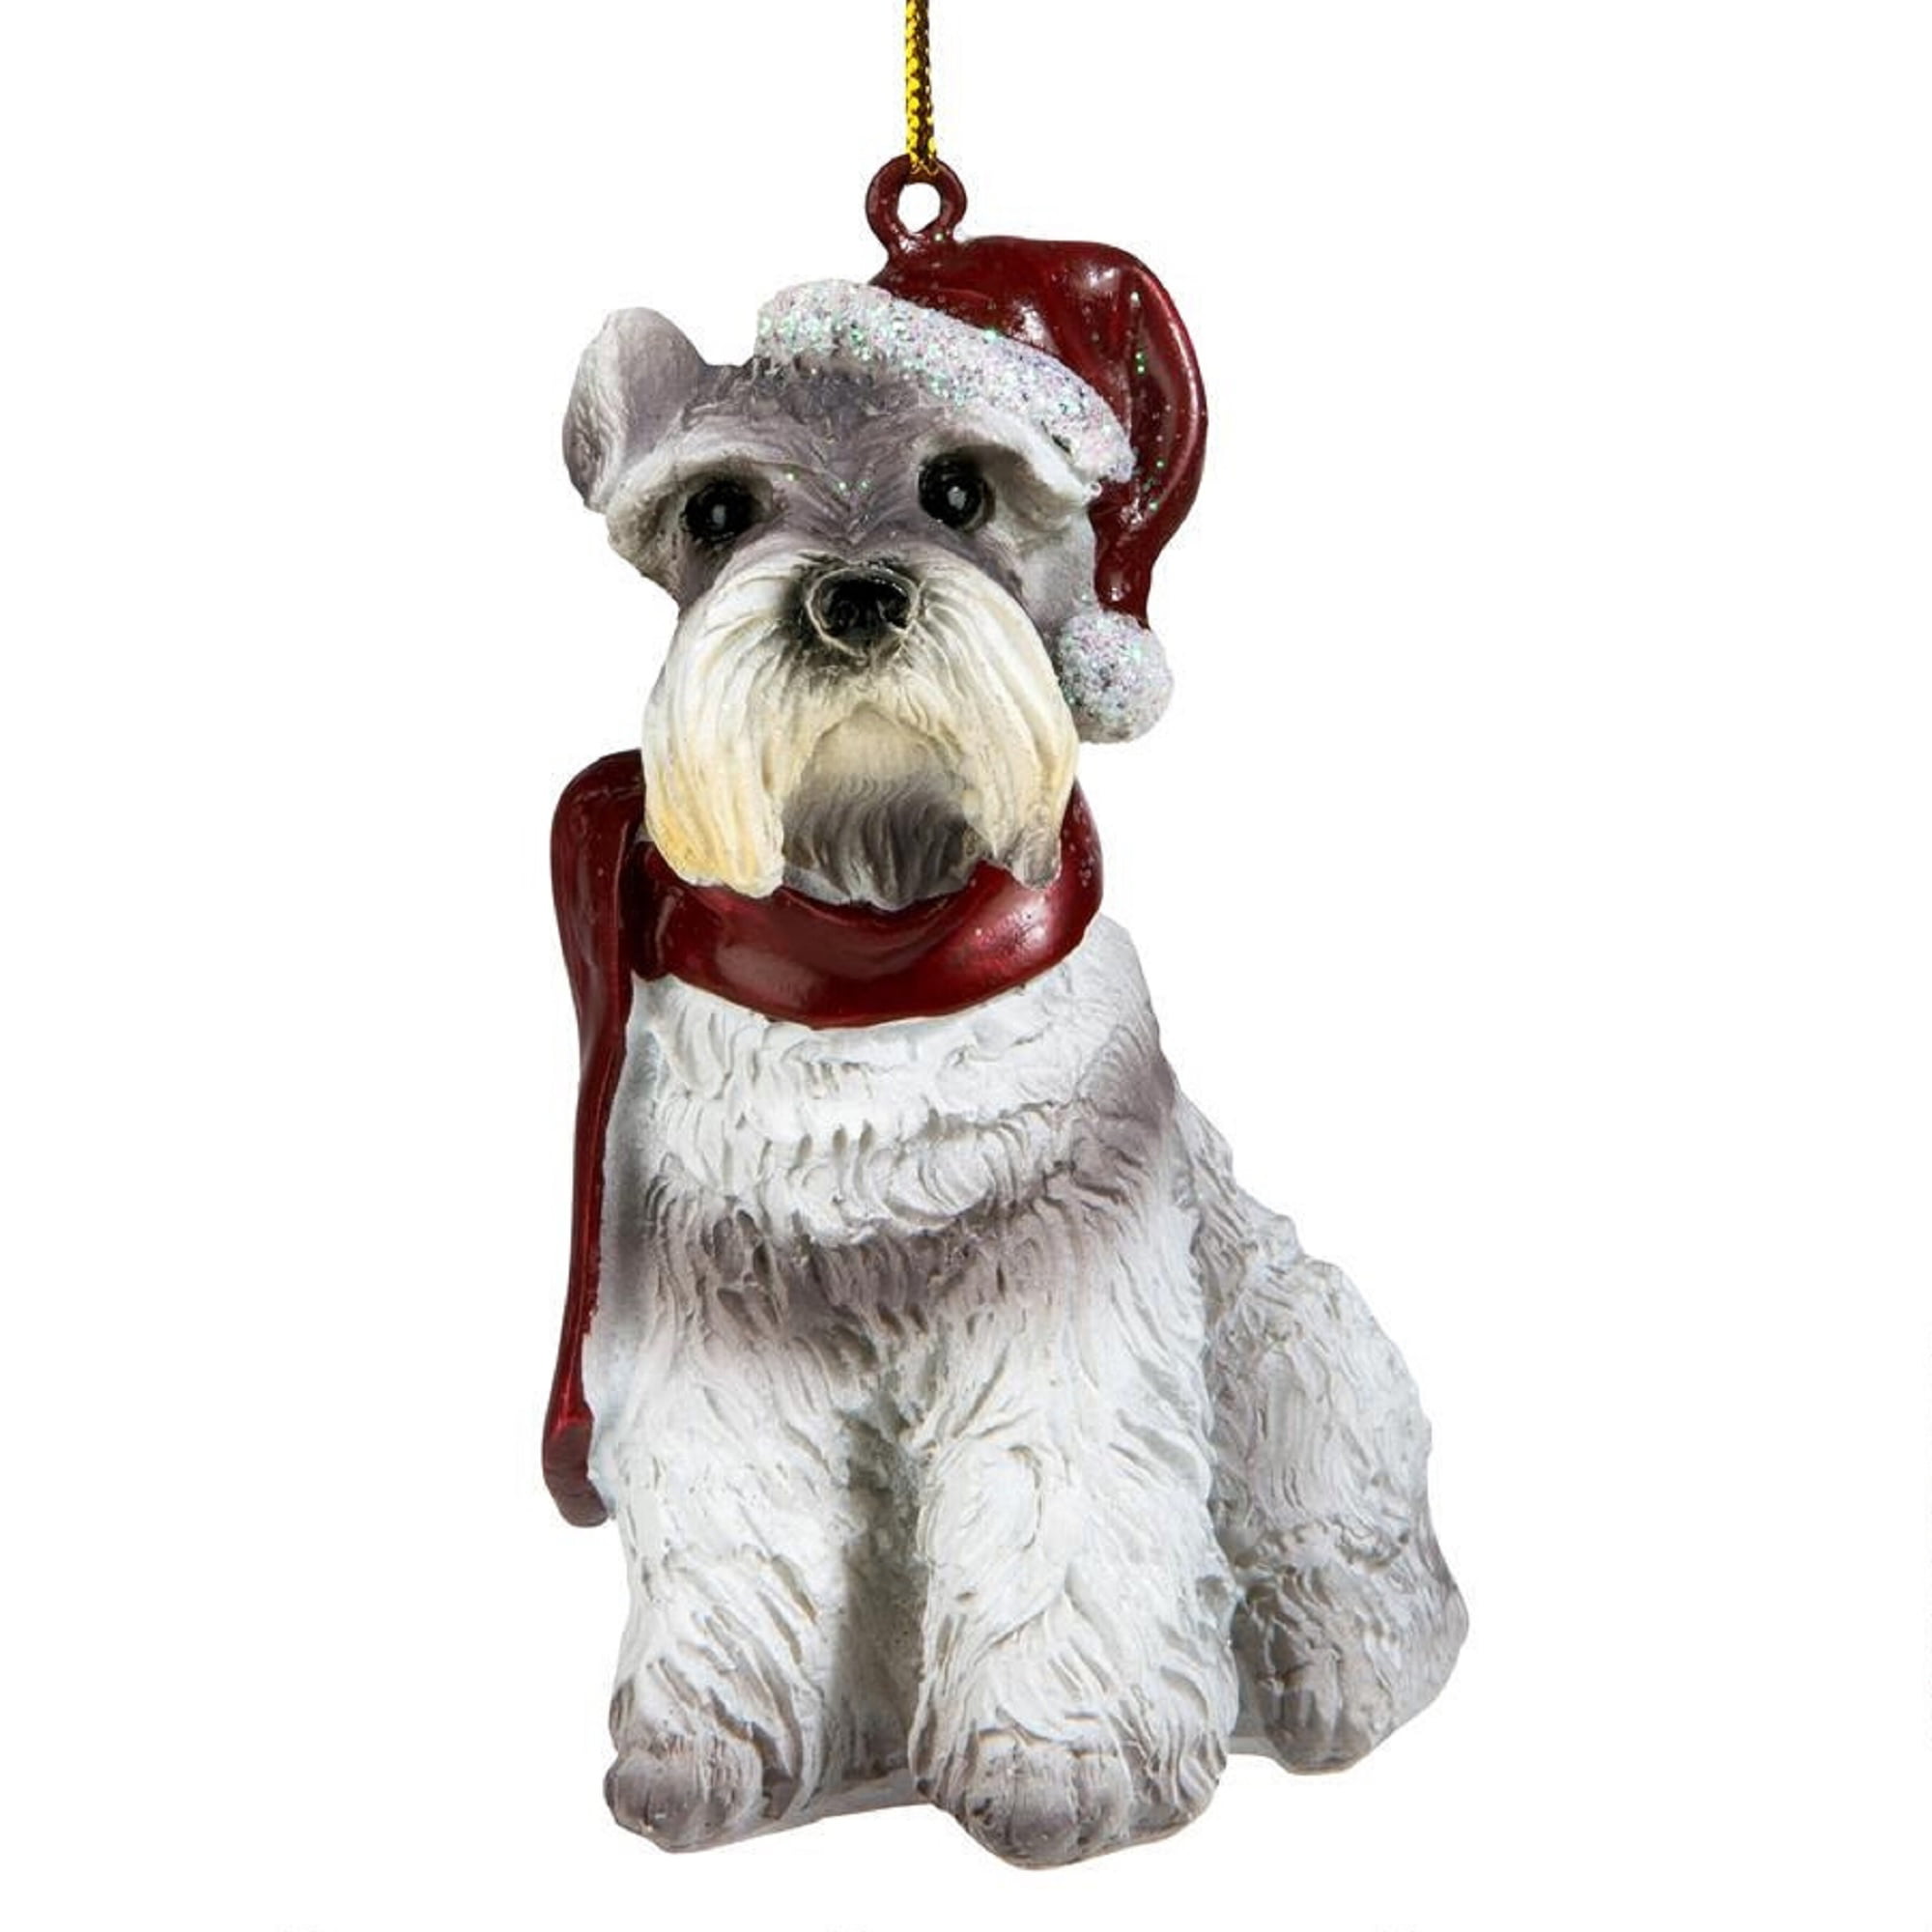 Details about  / Design Toscano Bulldog Holiday Dog Ornament Sculpture